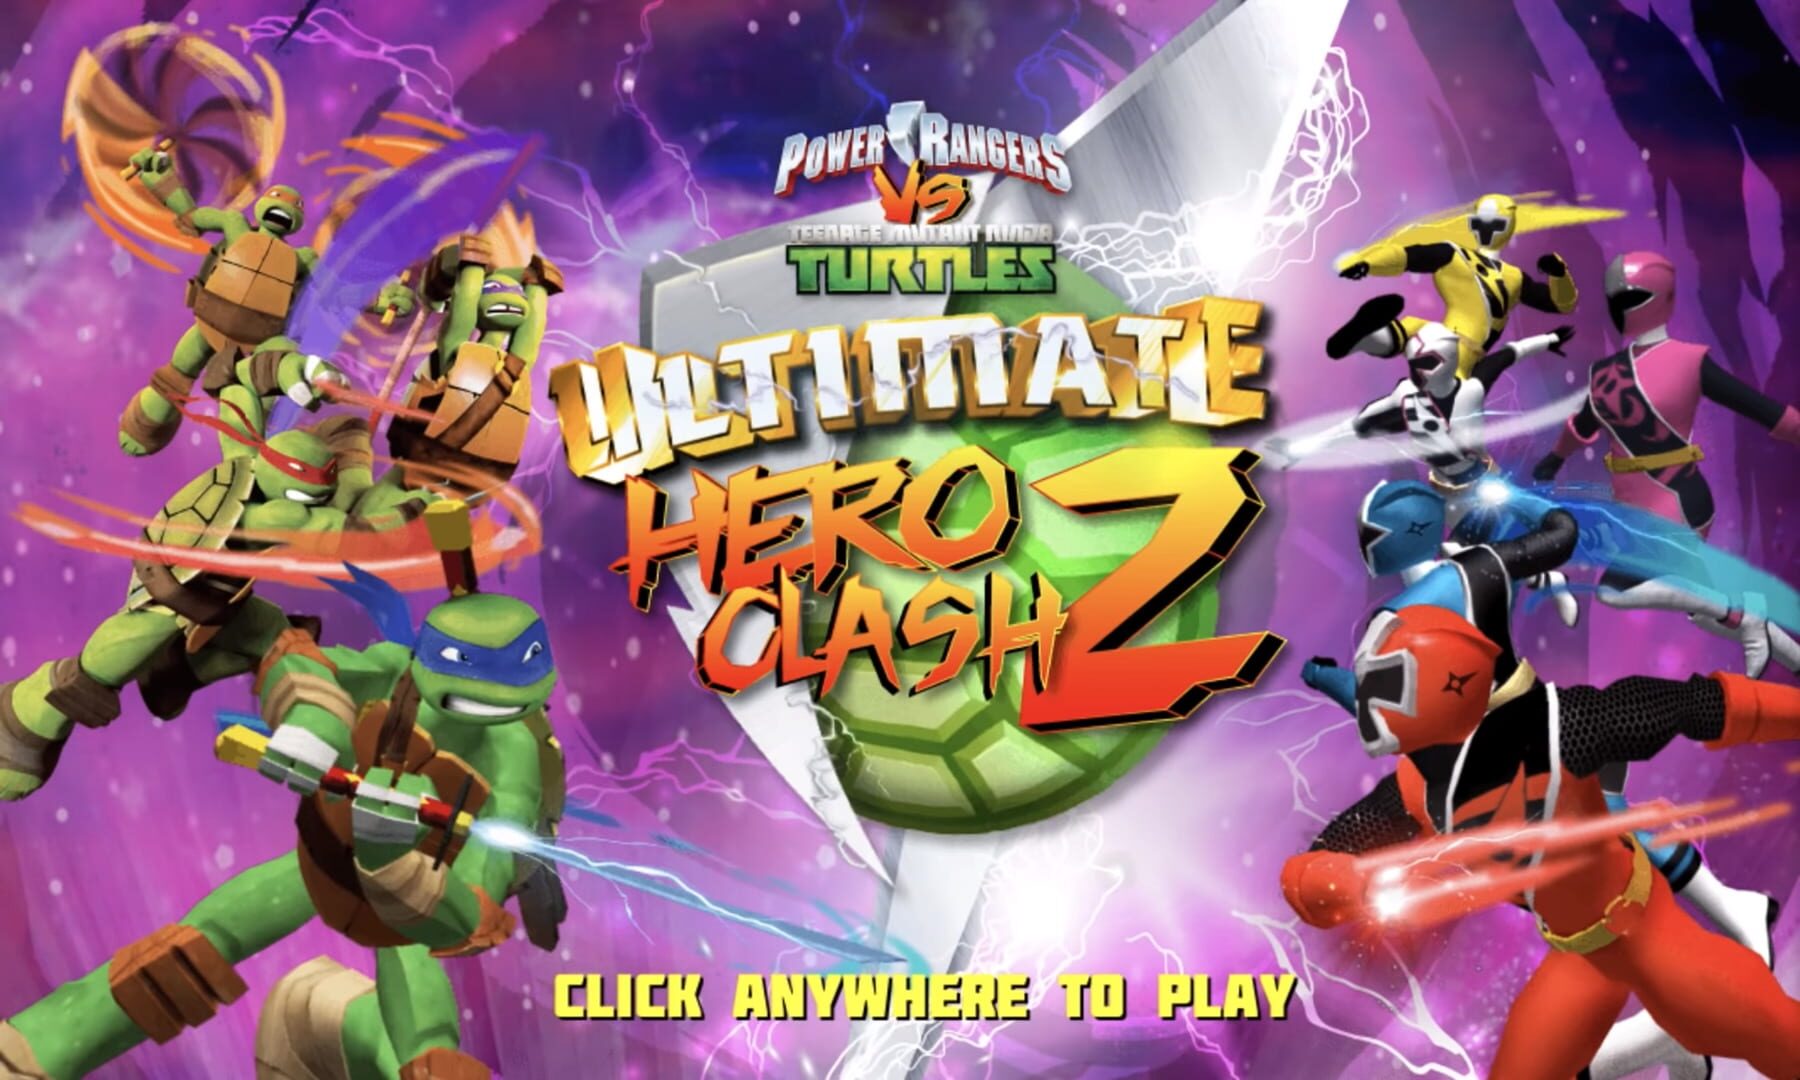 Arte - Power Rangers vs Teenage Mutant Ninja Turtles: Ultimate Hero Clash 2